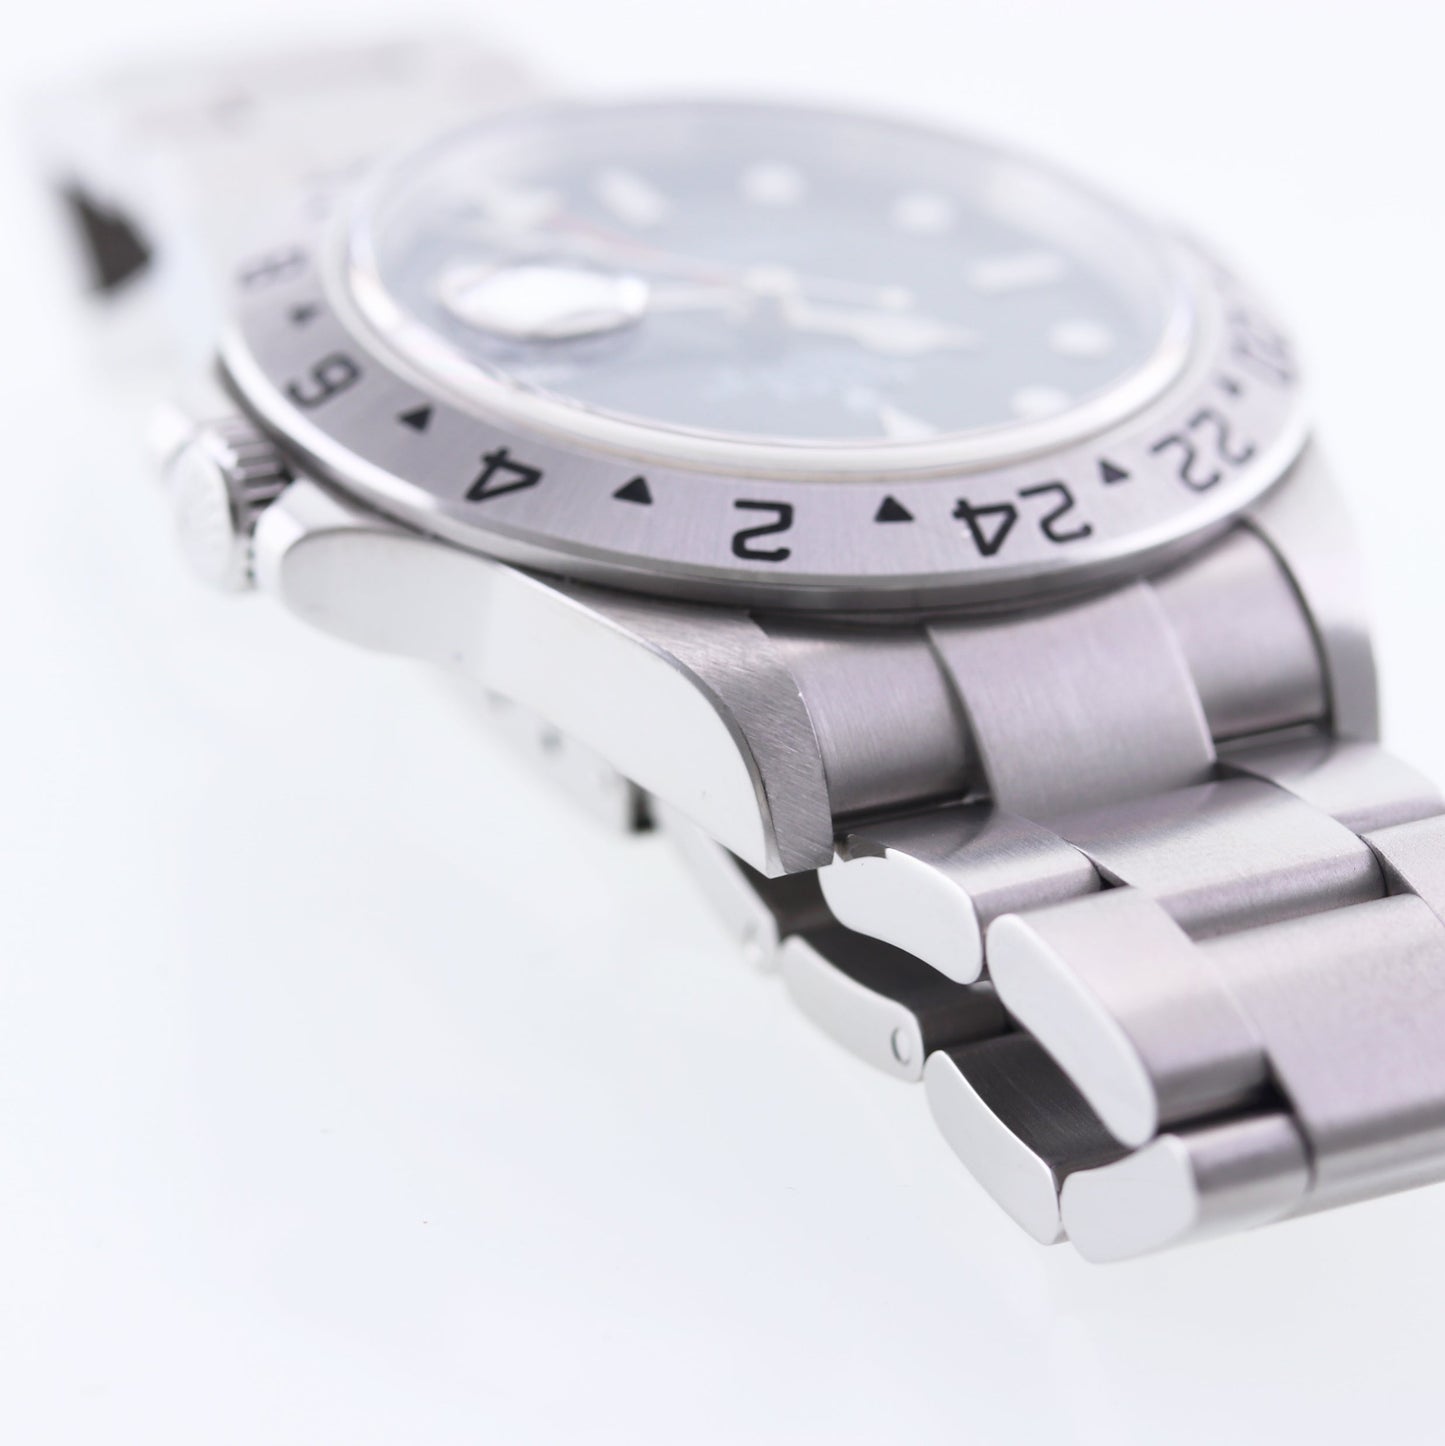 2010 PAPERS Rolex 16570 Black Steel 3186 movement Explorer 40mm Watch Box